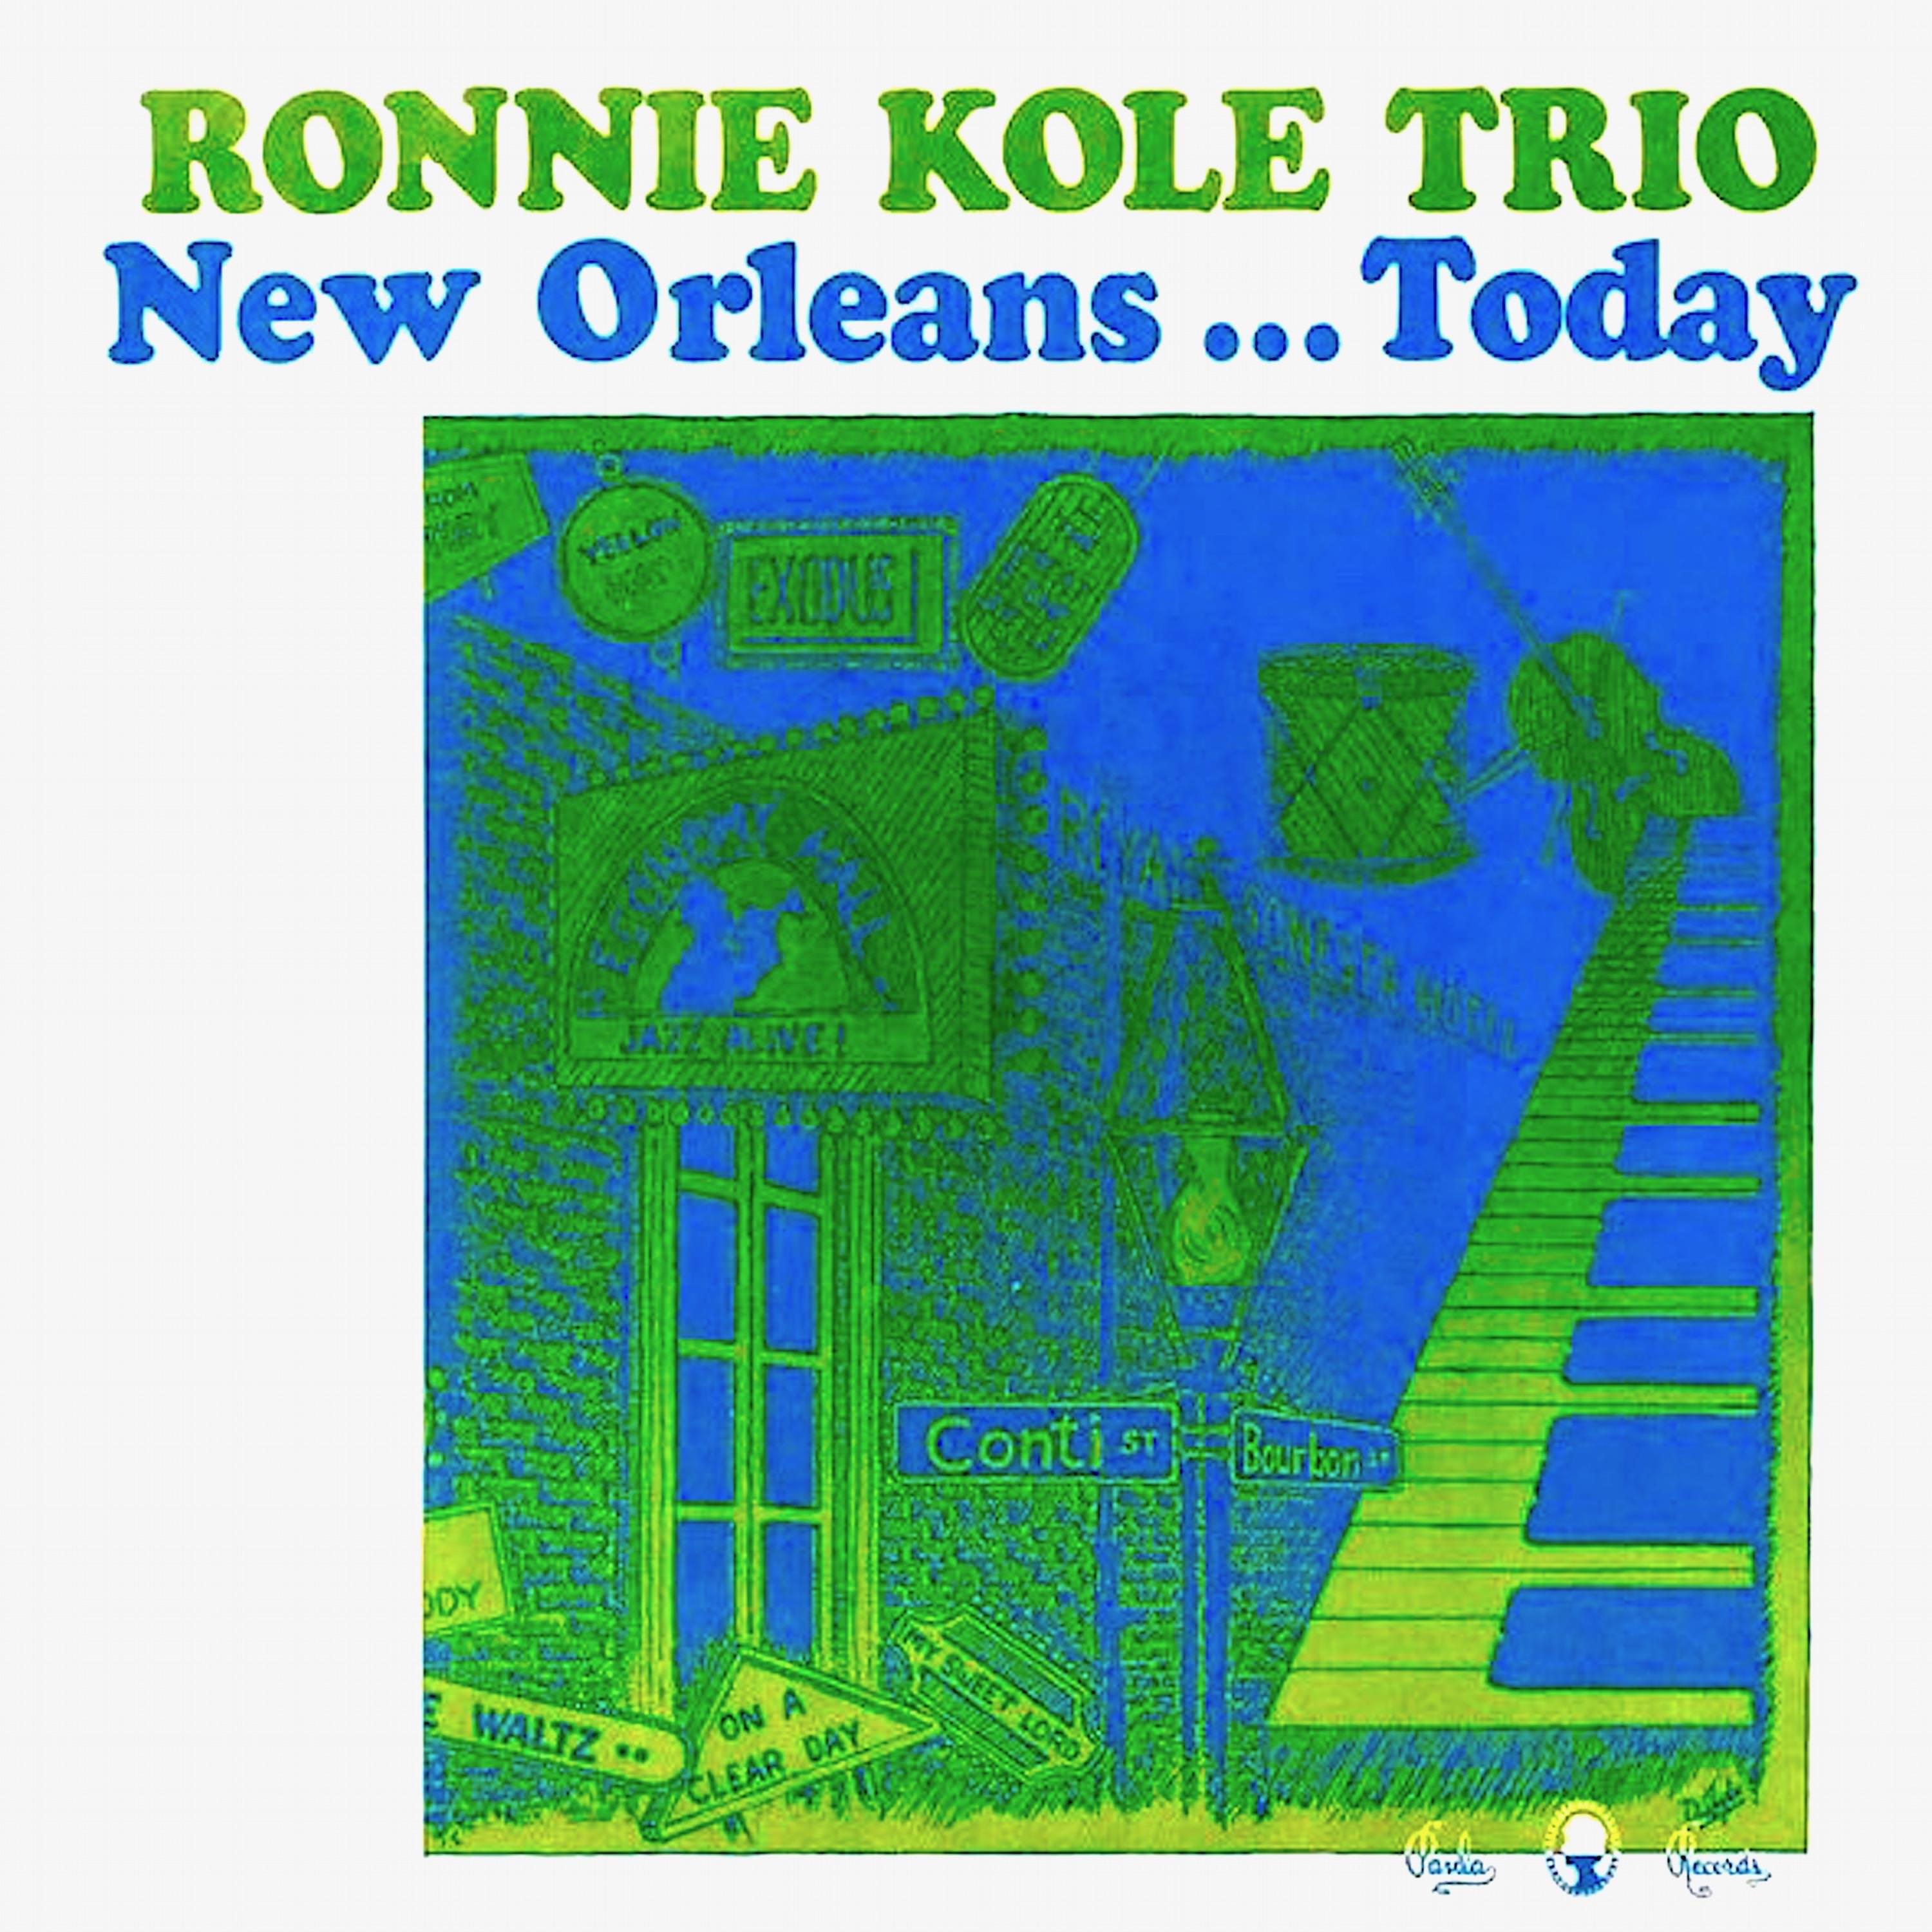 Ronnie Kole Trio - New Orleans Today (1971) [HDTracks FLAC 24bit/96kHz]